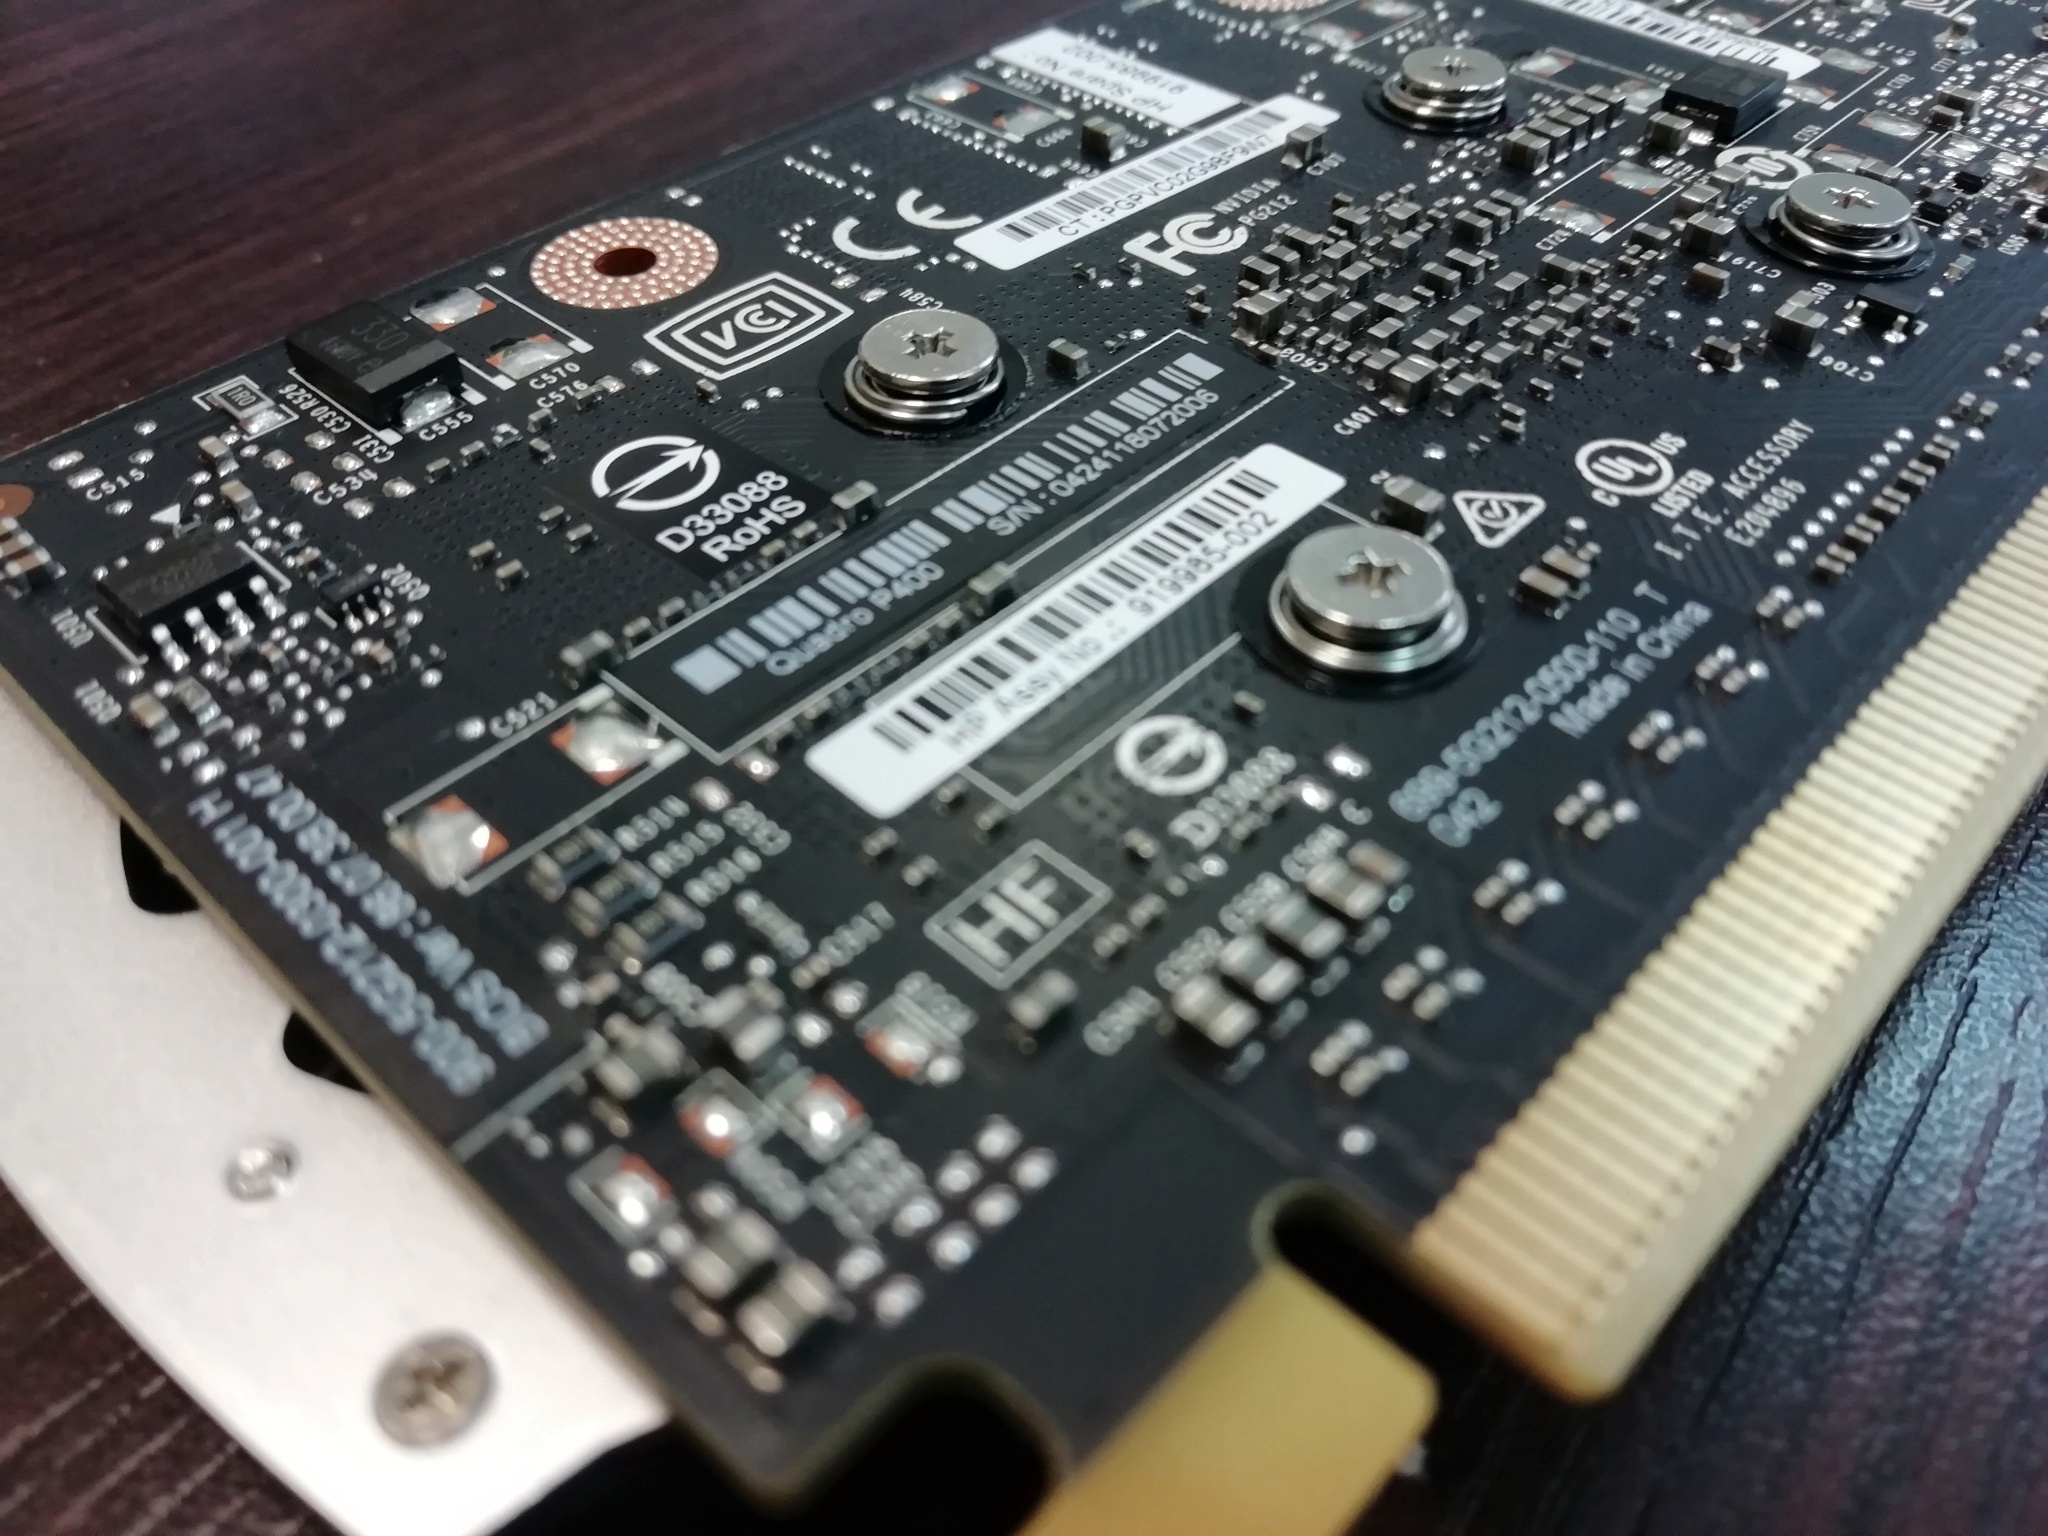 Quadro p400. Видеокарта Quadro p400. Профессиональная видеокарта NVIDIA Quadro p400 dell PCI-E 2048mb. Quadro p400 2gb High profile.